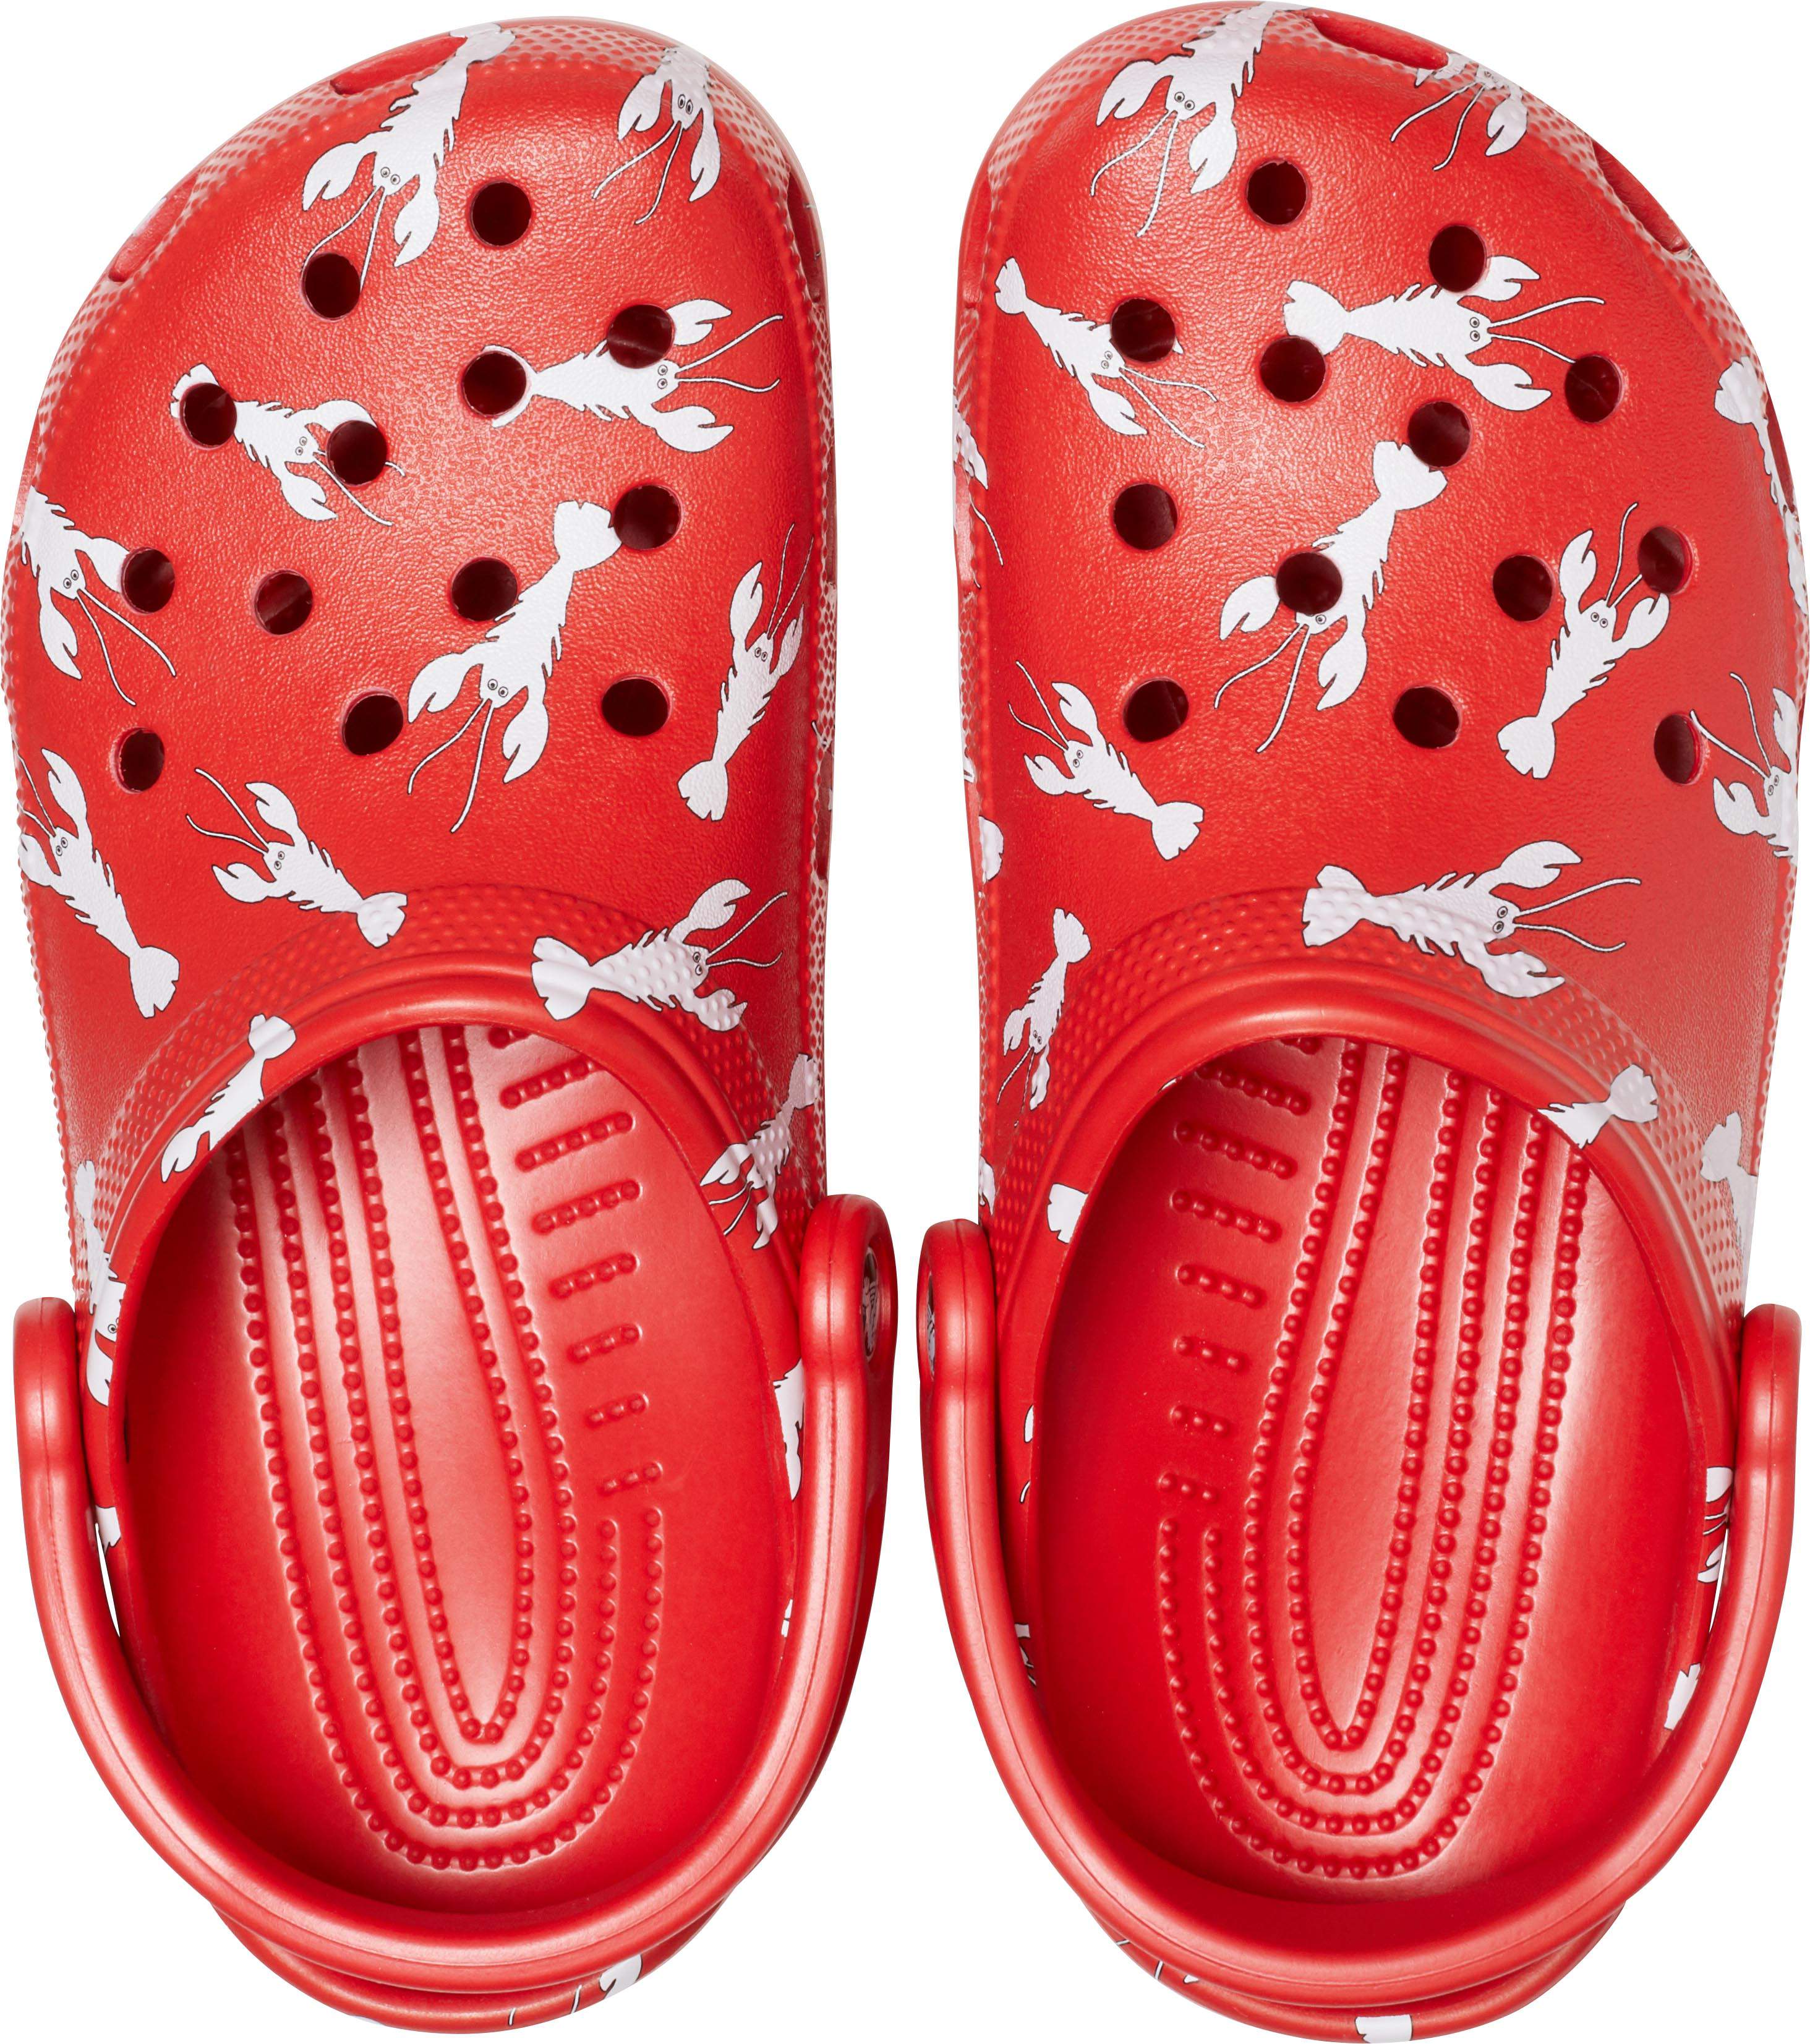 strawberry crocs size 8